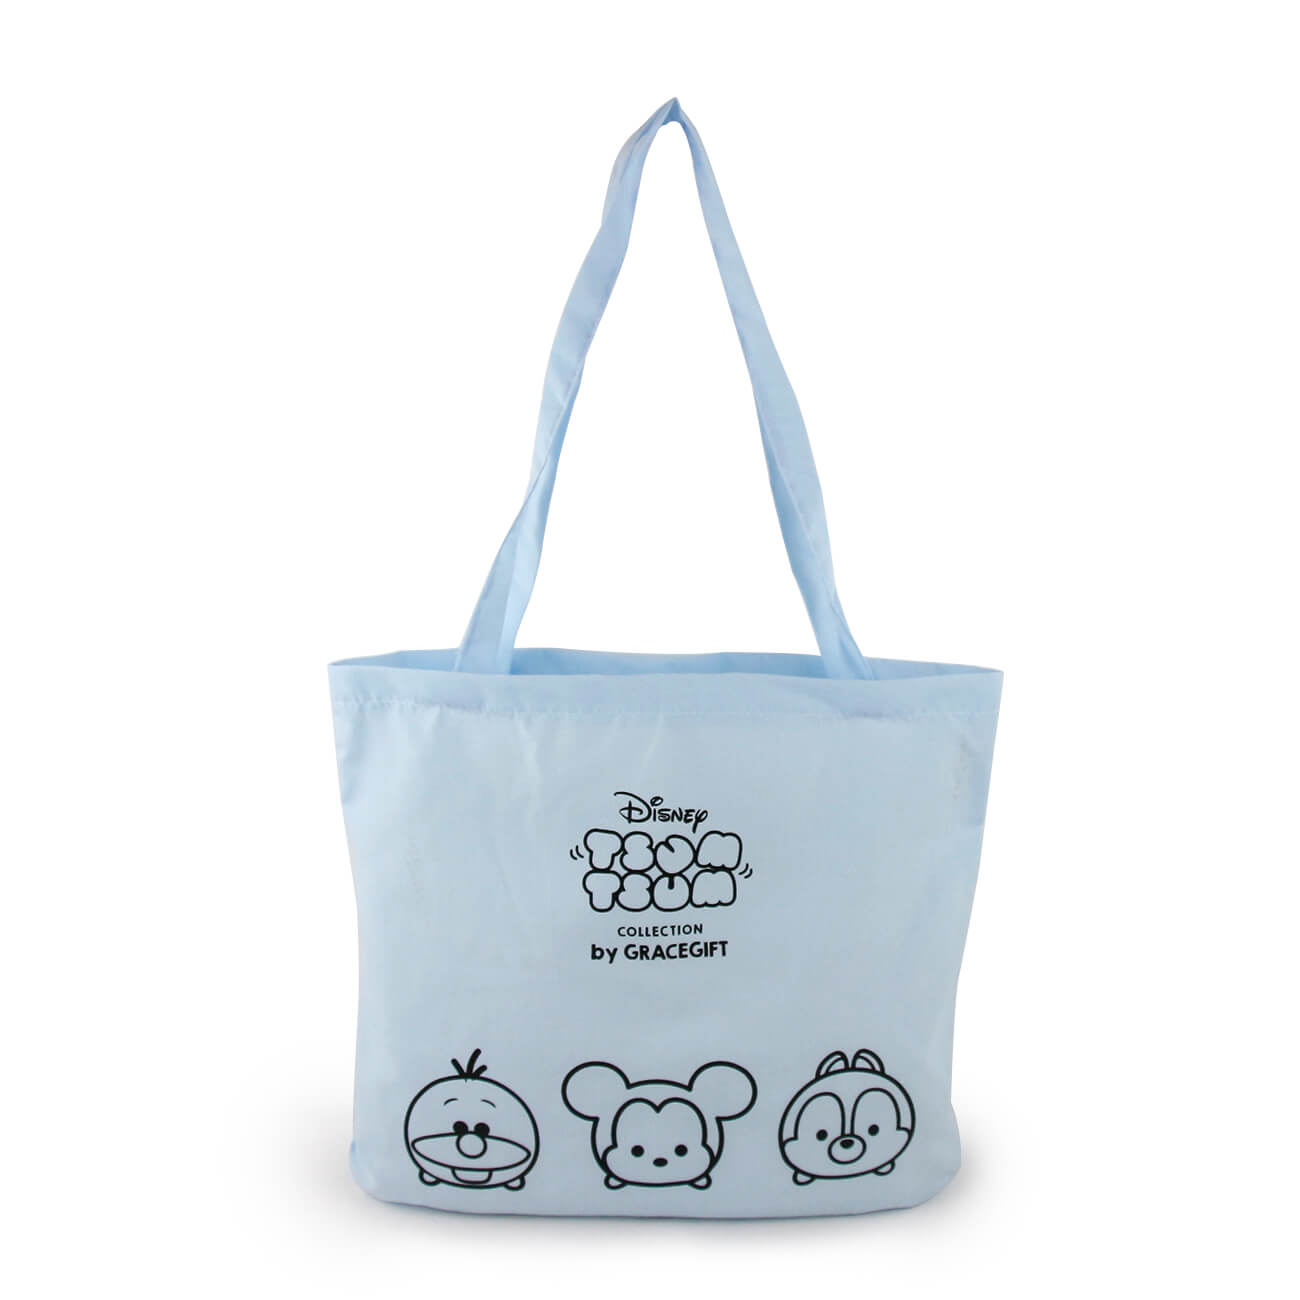 Farmer's Market Certified Organic Cotton Bag